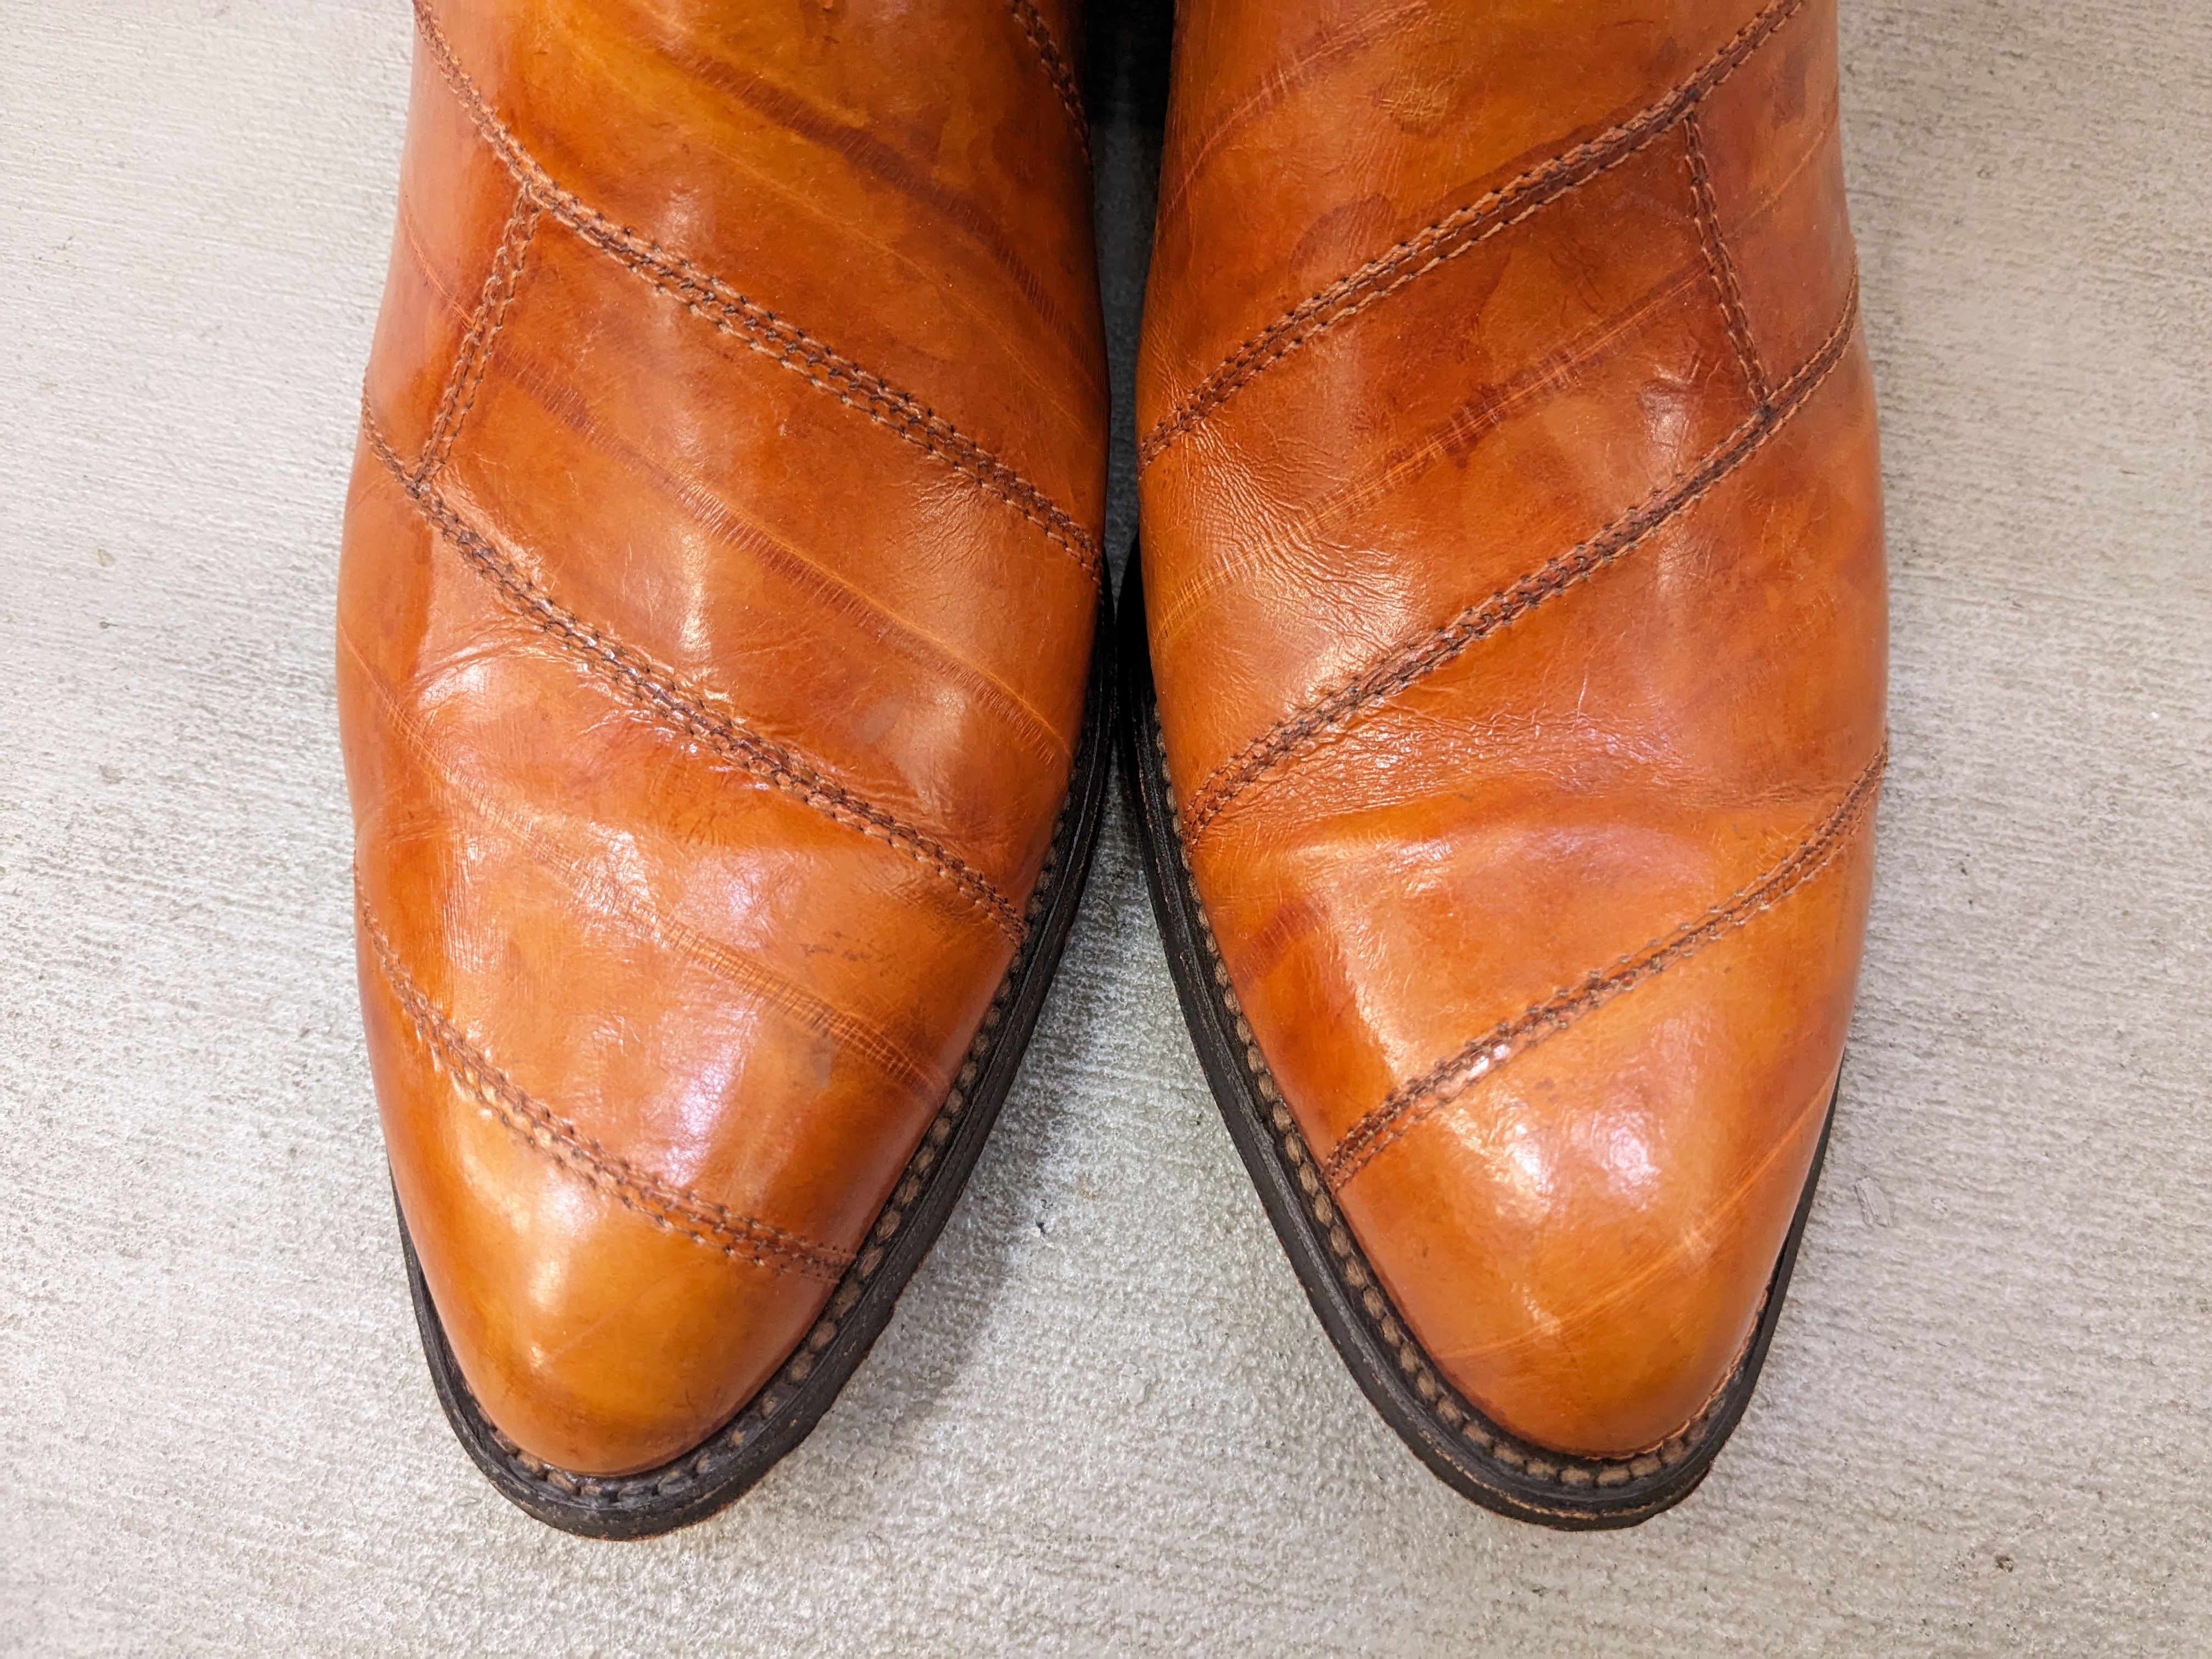 Vintage Cowboy Boots Brown Size 10 Eel Leather Botas Mexico Size US 10 / EU 43 - 5 Thumbnail